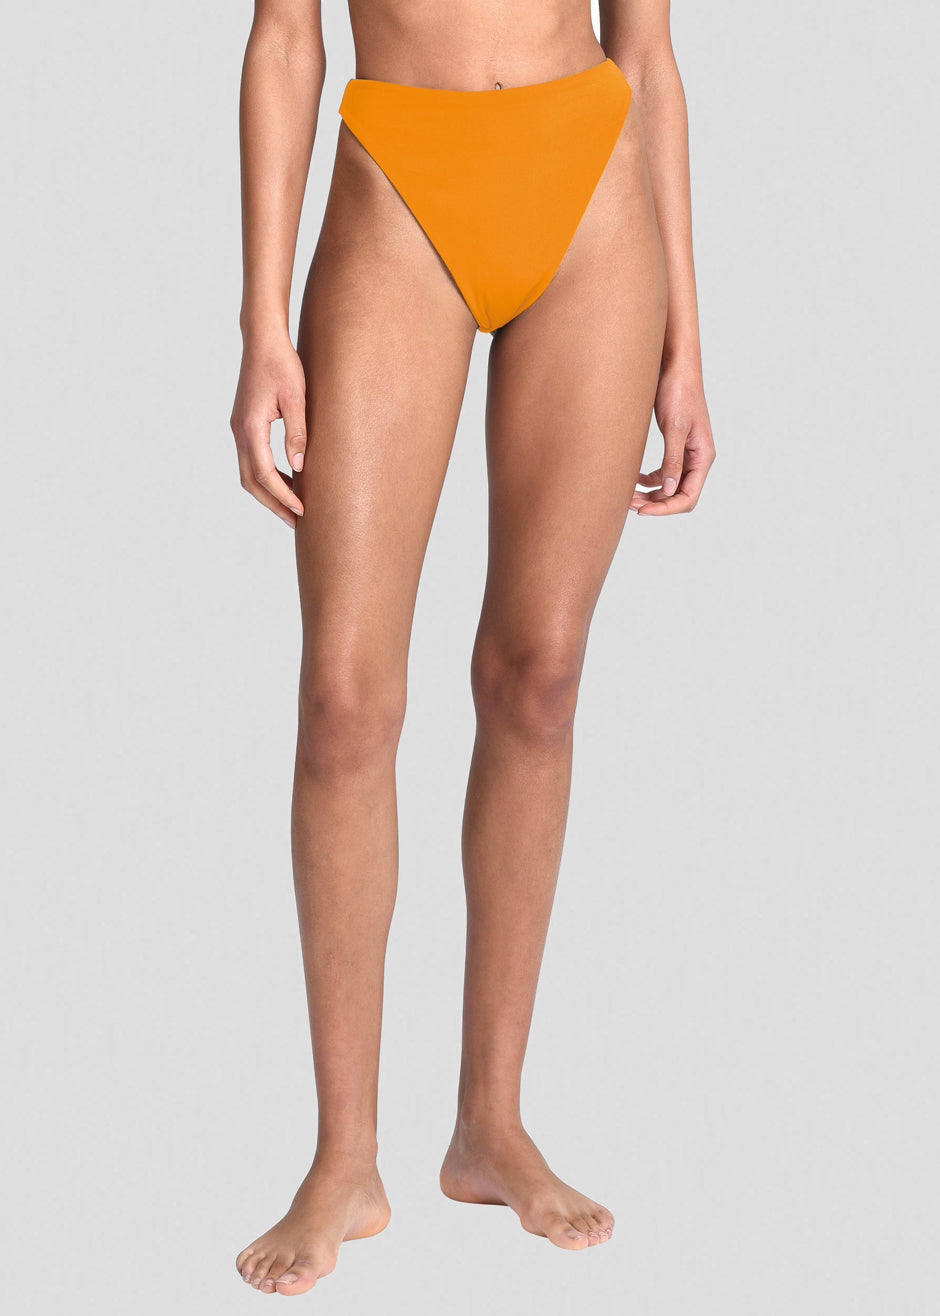 Aexae Triangle High Cut Swimsuit Bottoms - Orange